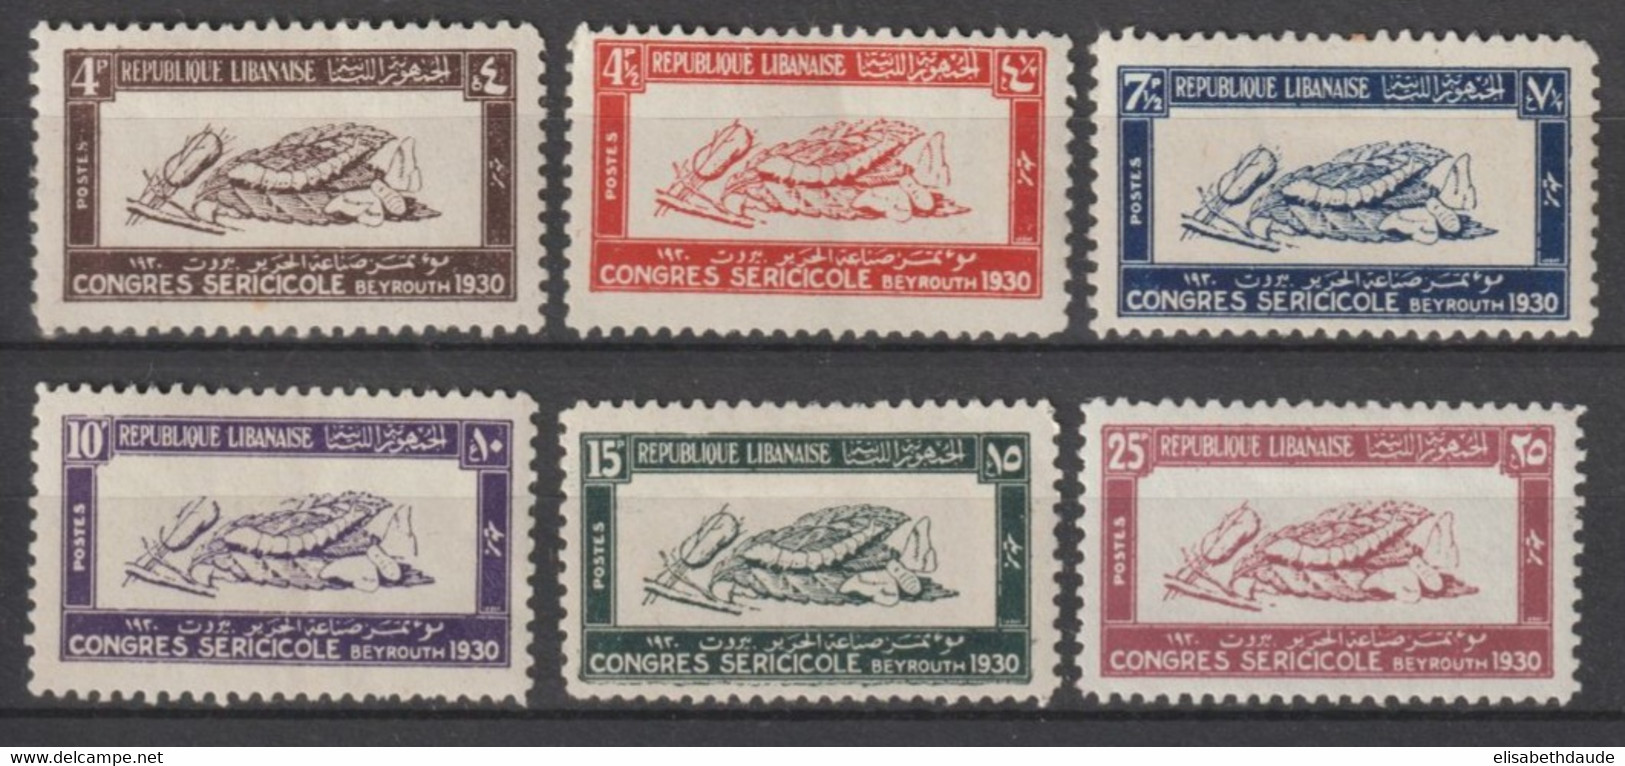 GRAND-LIBAN - 1930 - SERIE COMPLETE CONGRES SERICOLE - YVERT N°122/127 * MH - COTE = 104 EUR. - Ongebruikt